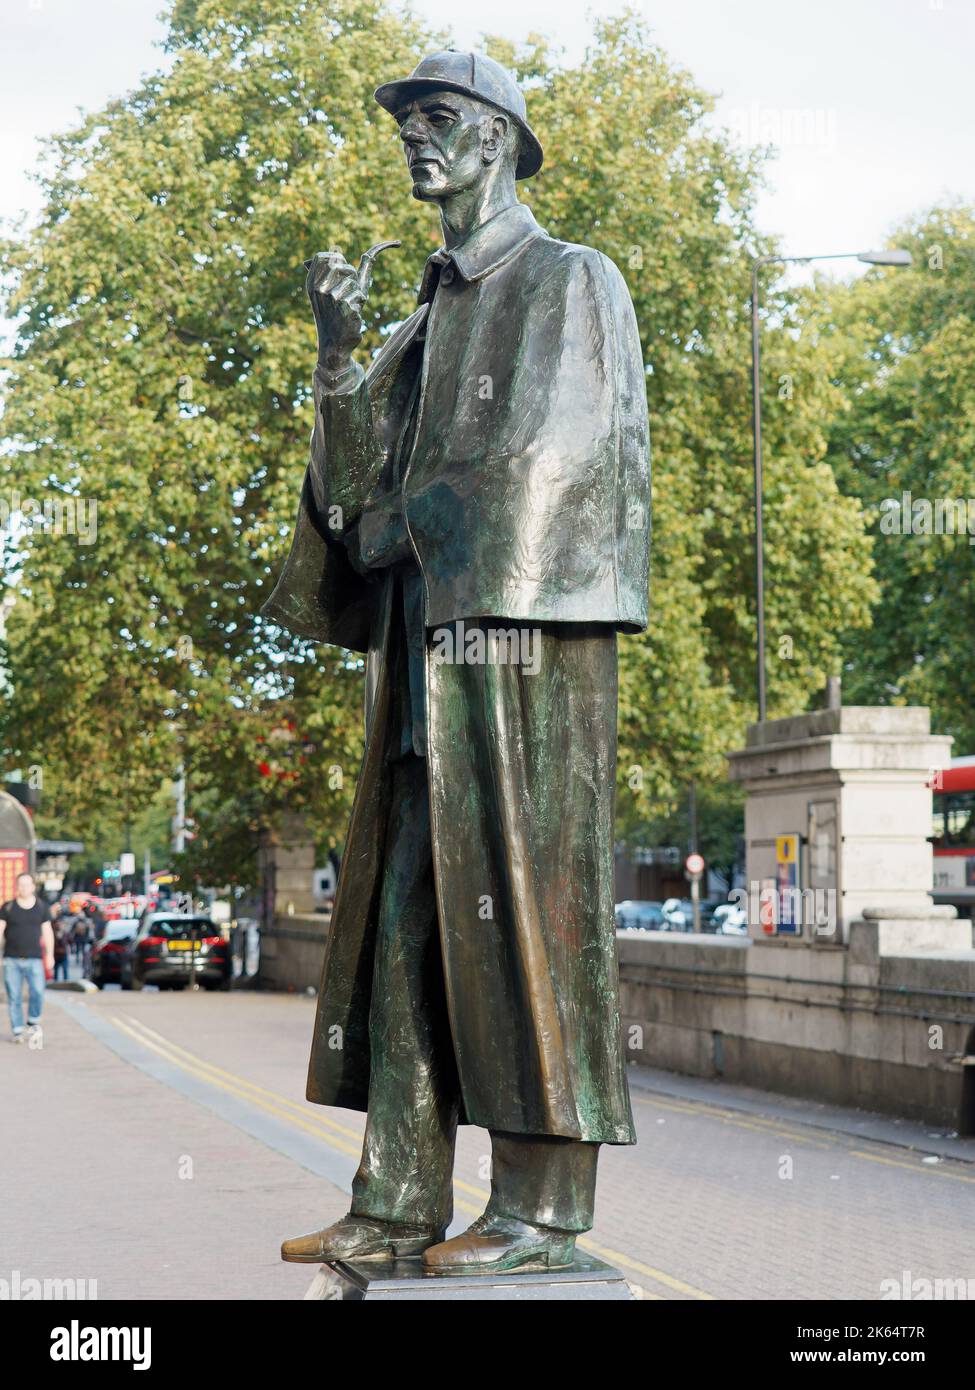 Bronzestatue des Bildhauers John Doubleday des berühmten fiktiven Detektivs Sherlock Holmes vor der U-Bahnstation Baker Street in der Marylebone Road in London Stockfoto